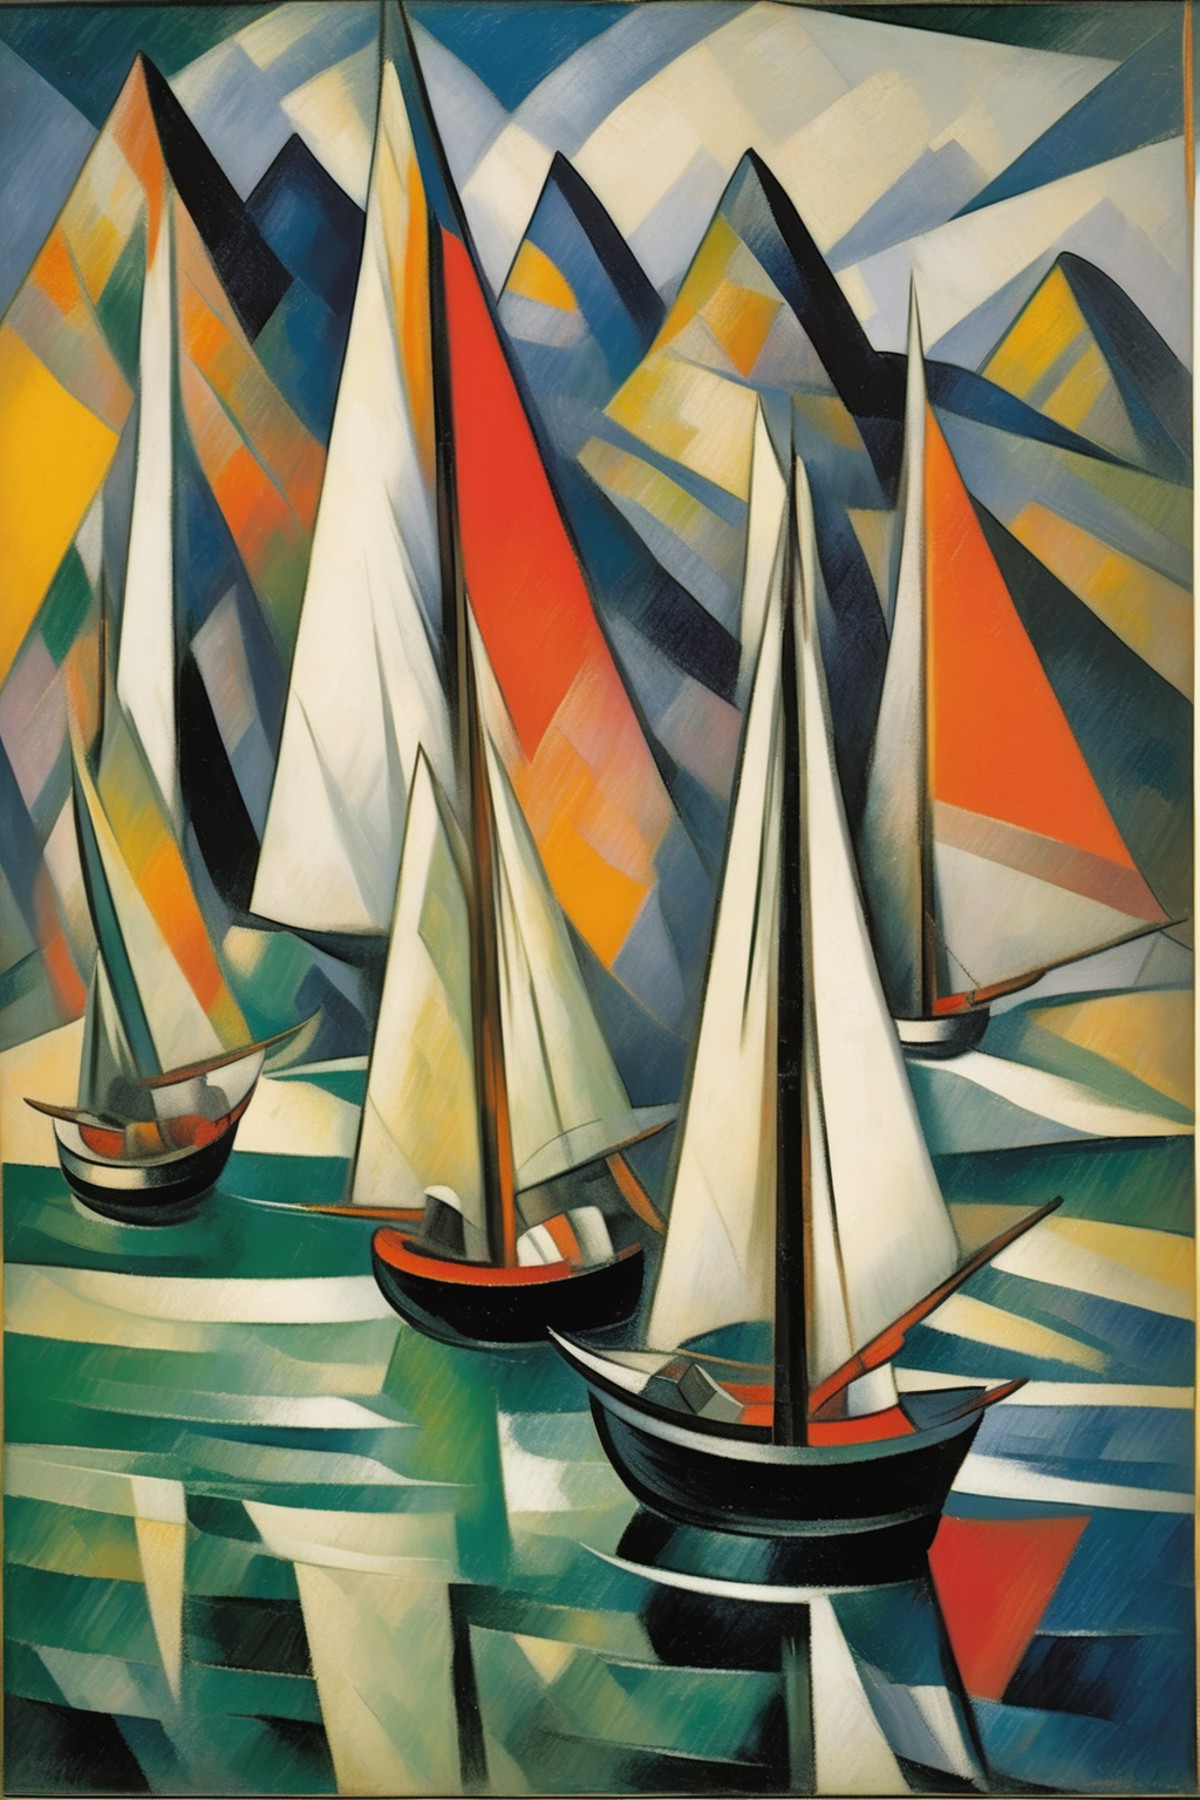 <lora:Lyonel Feininger Style:1>Lyonel Feininger Style - 102572. A painting by Raymond Duchamp-Villon. A painting of sailin...